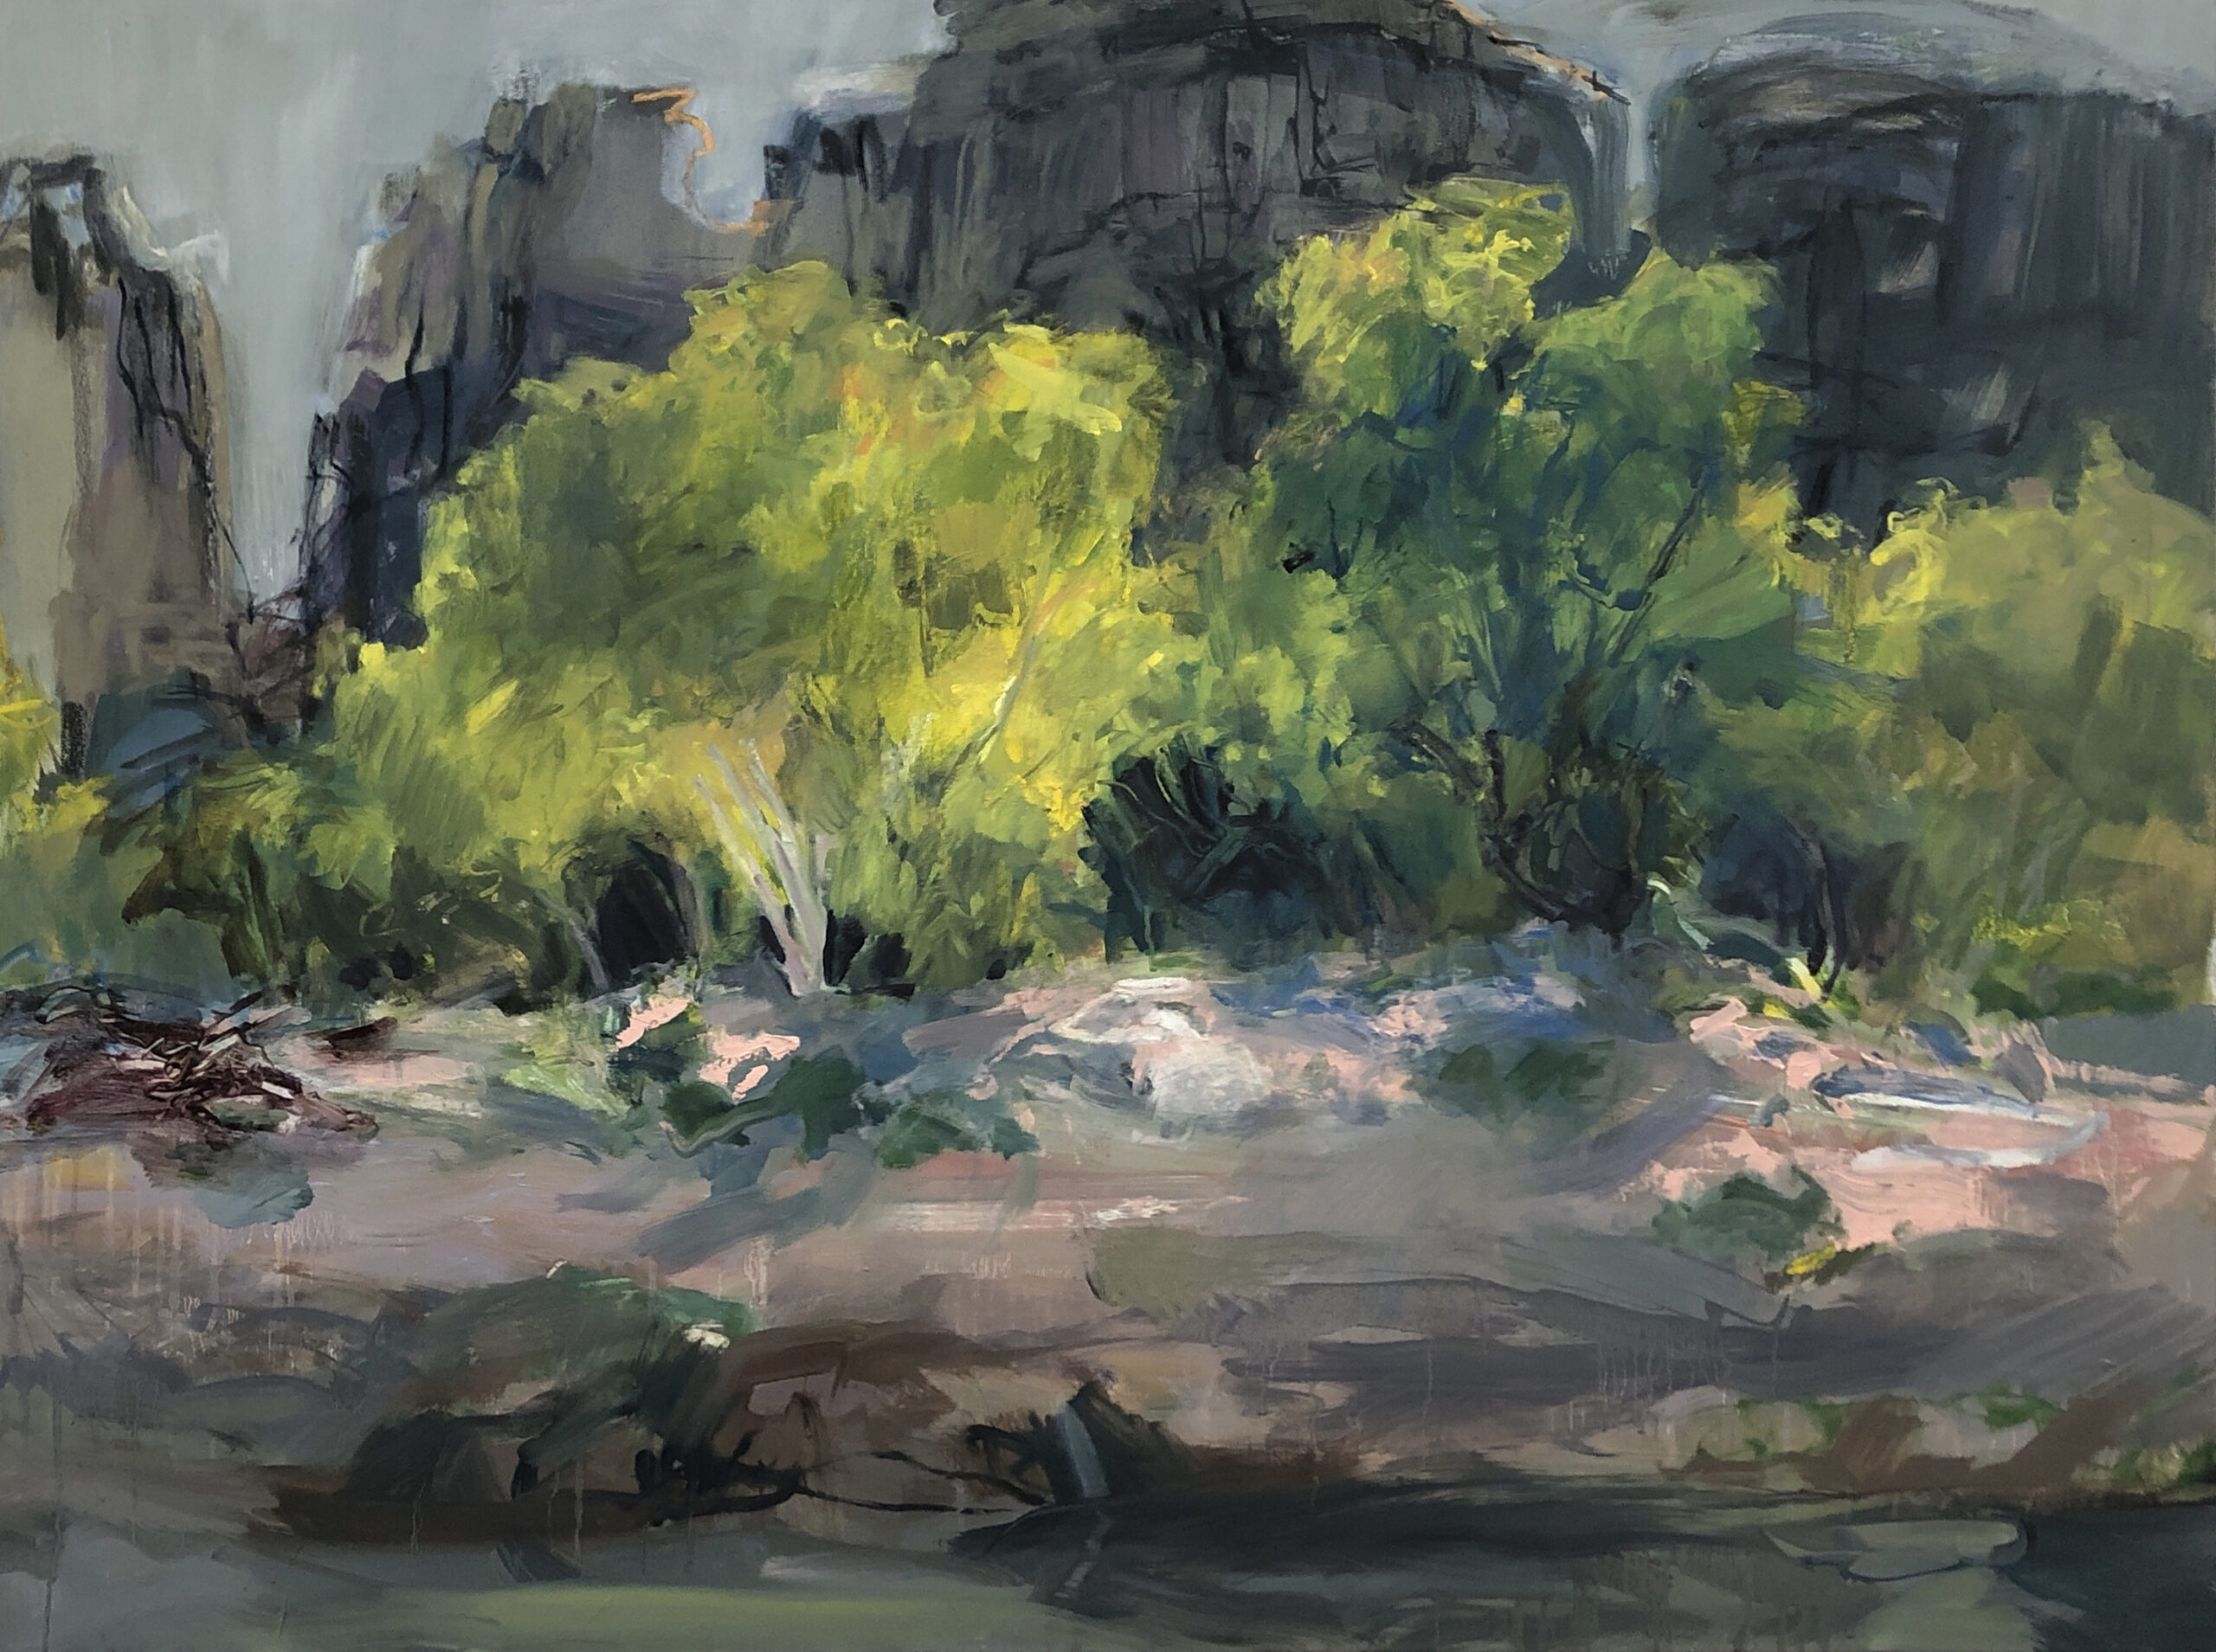 Kerry McInnis 'Geike Cliffs' oil on canvas 92 x 122cm $10,000